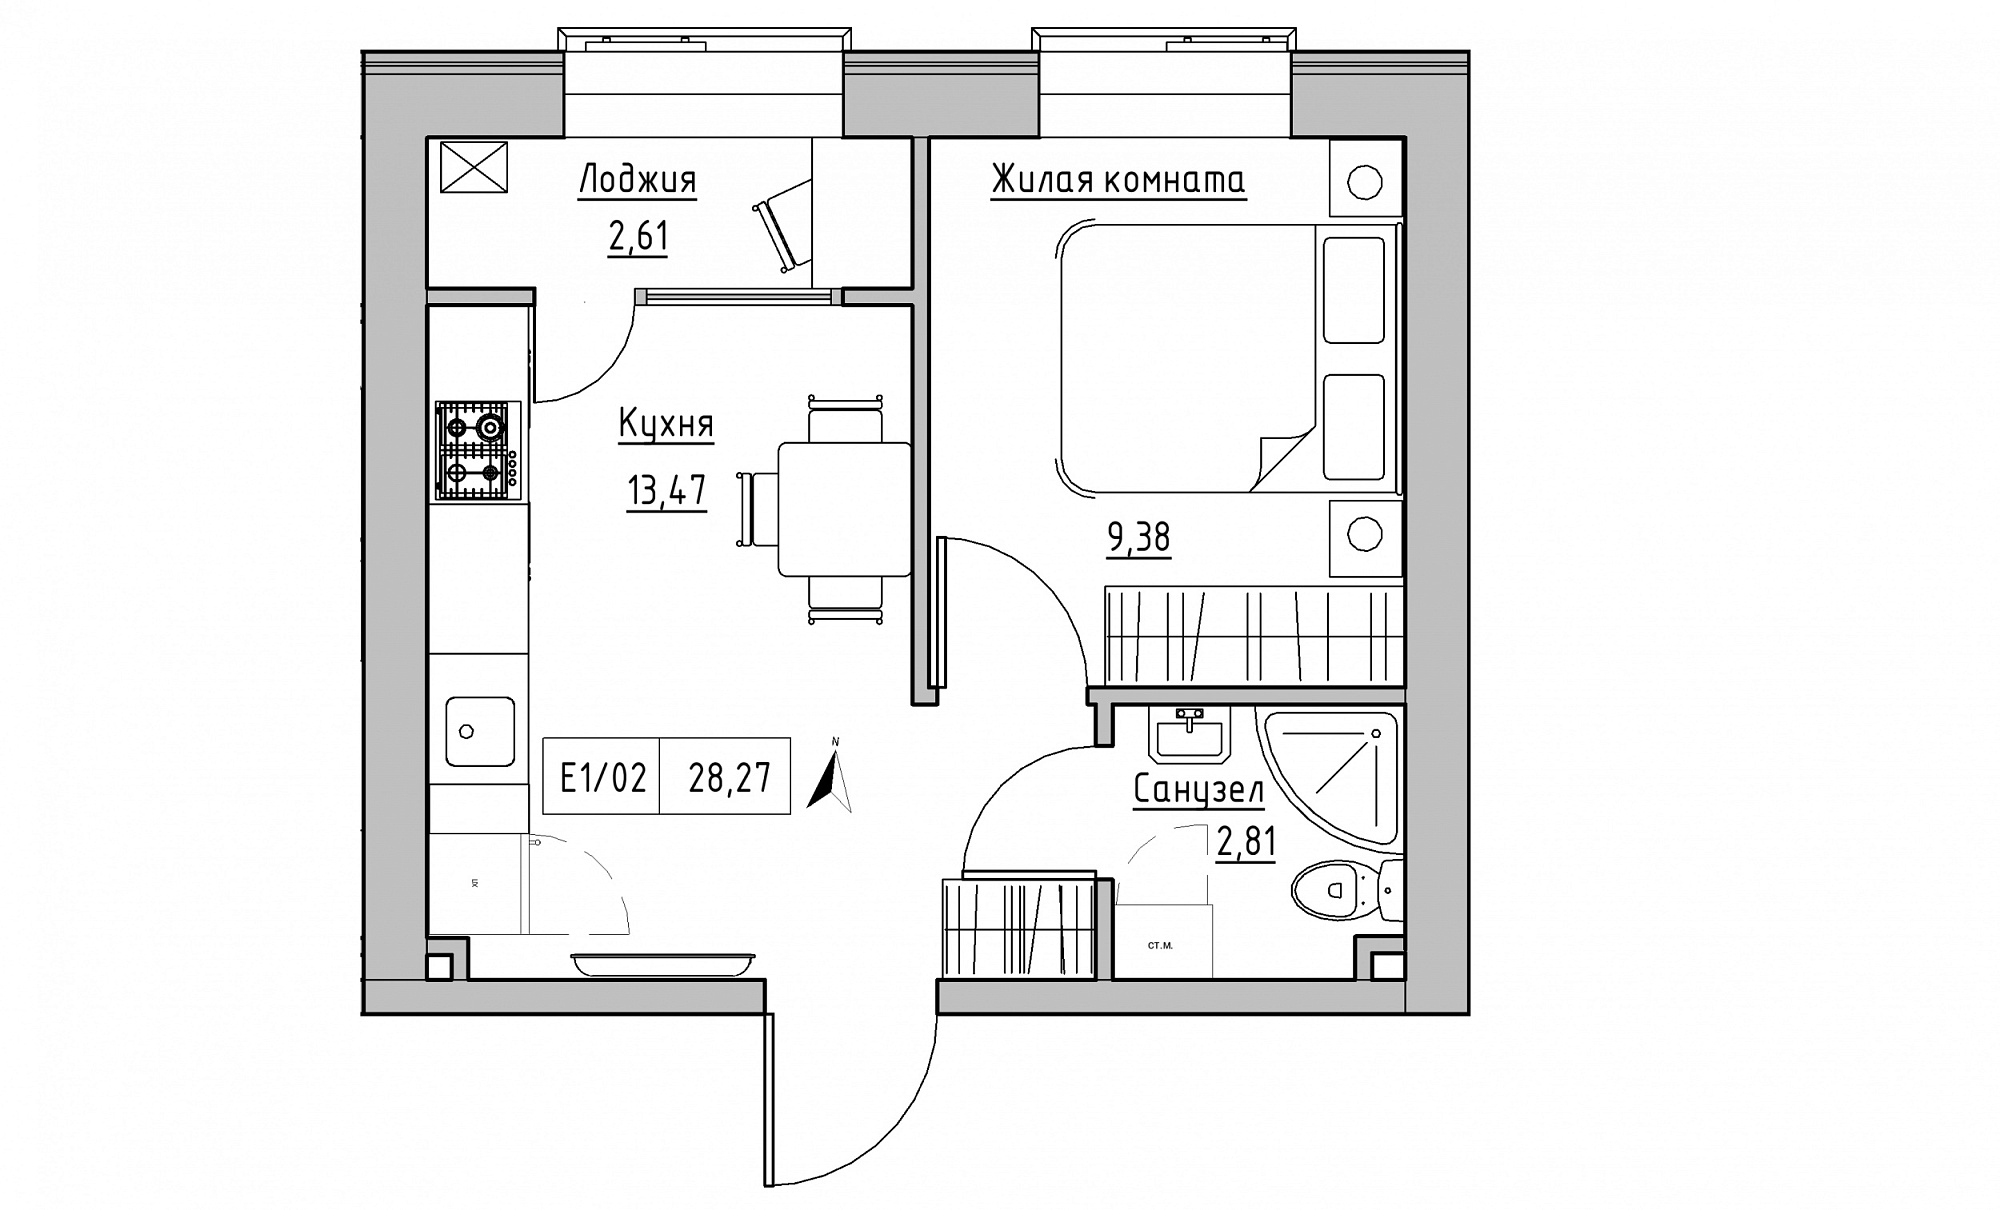 Planning 1-rm flats area 28.27m2, KS-015-01/0015.